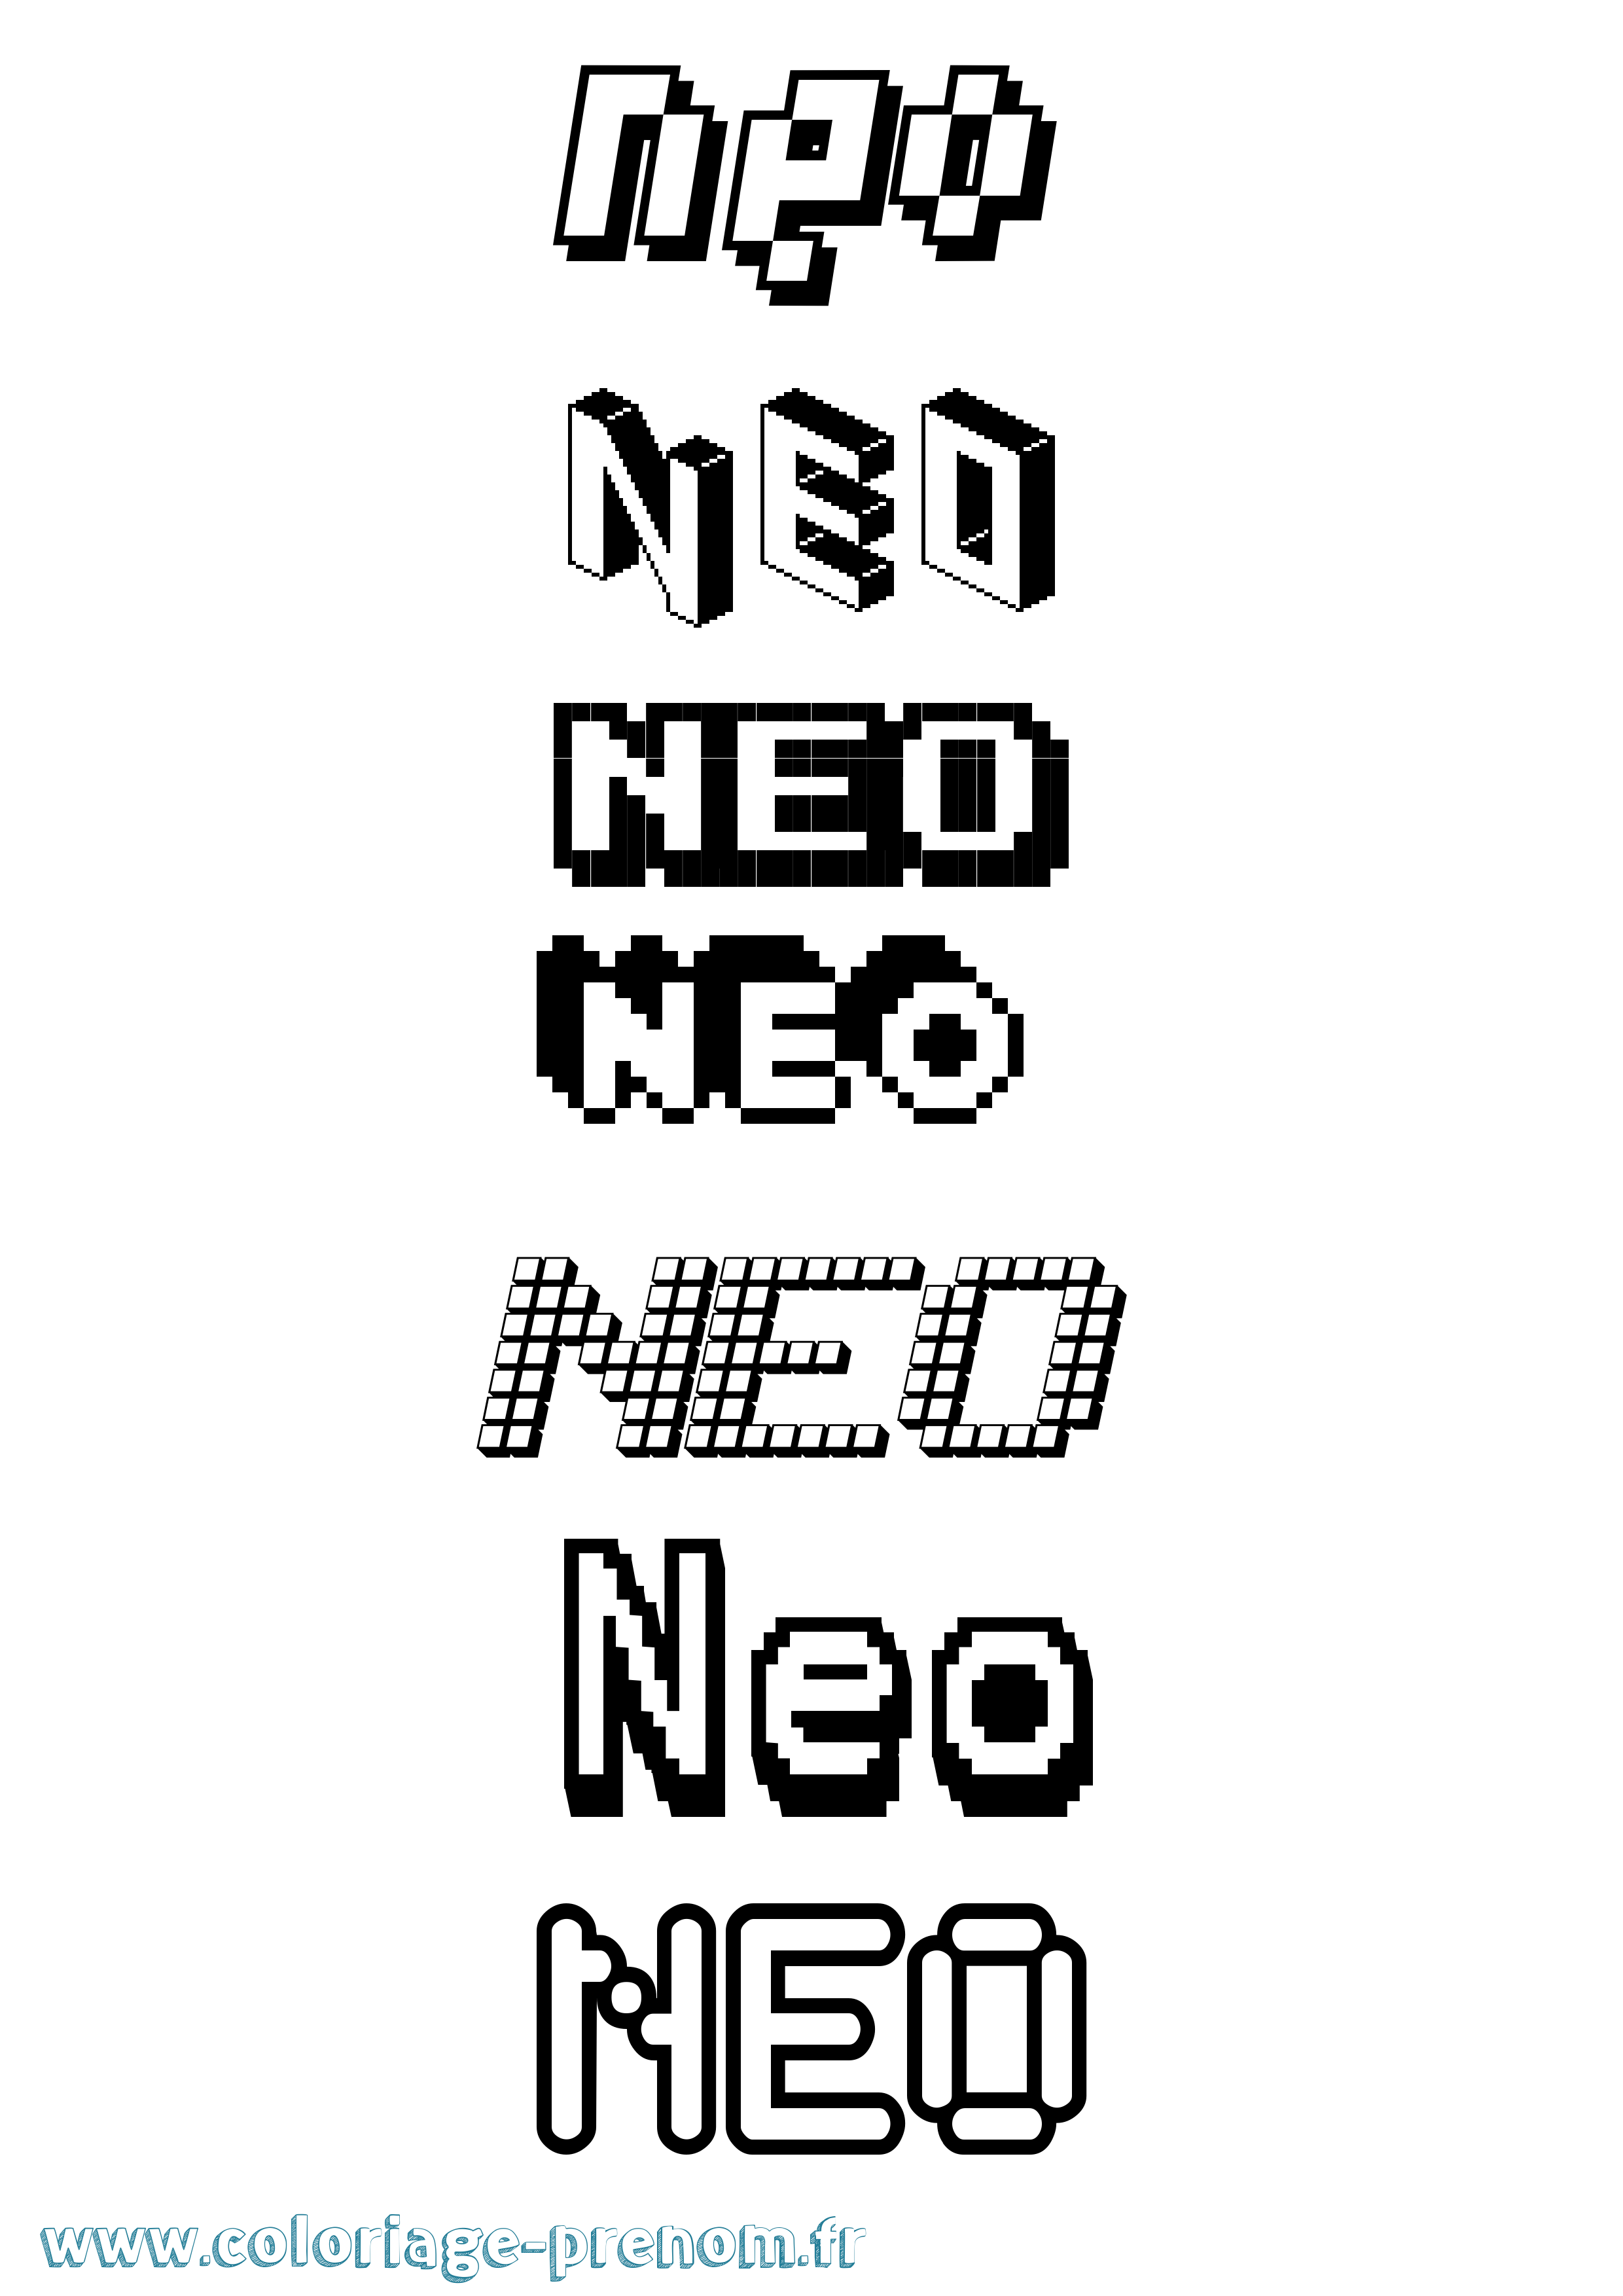 Coloriage prénom Neo